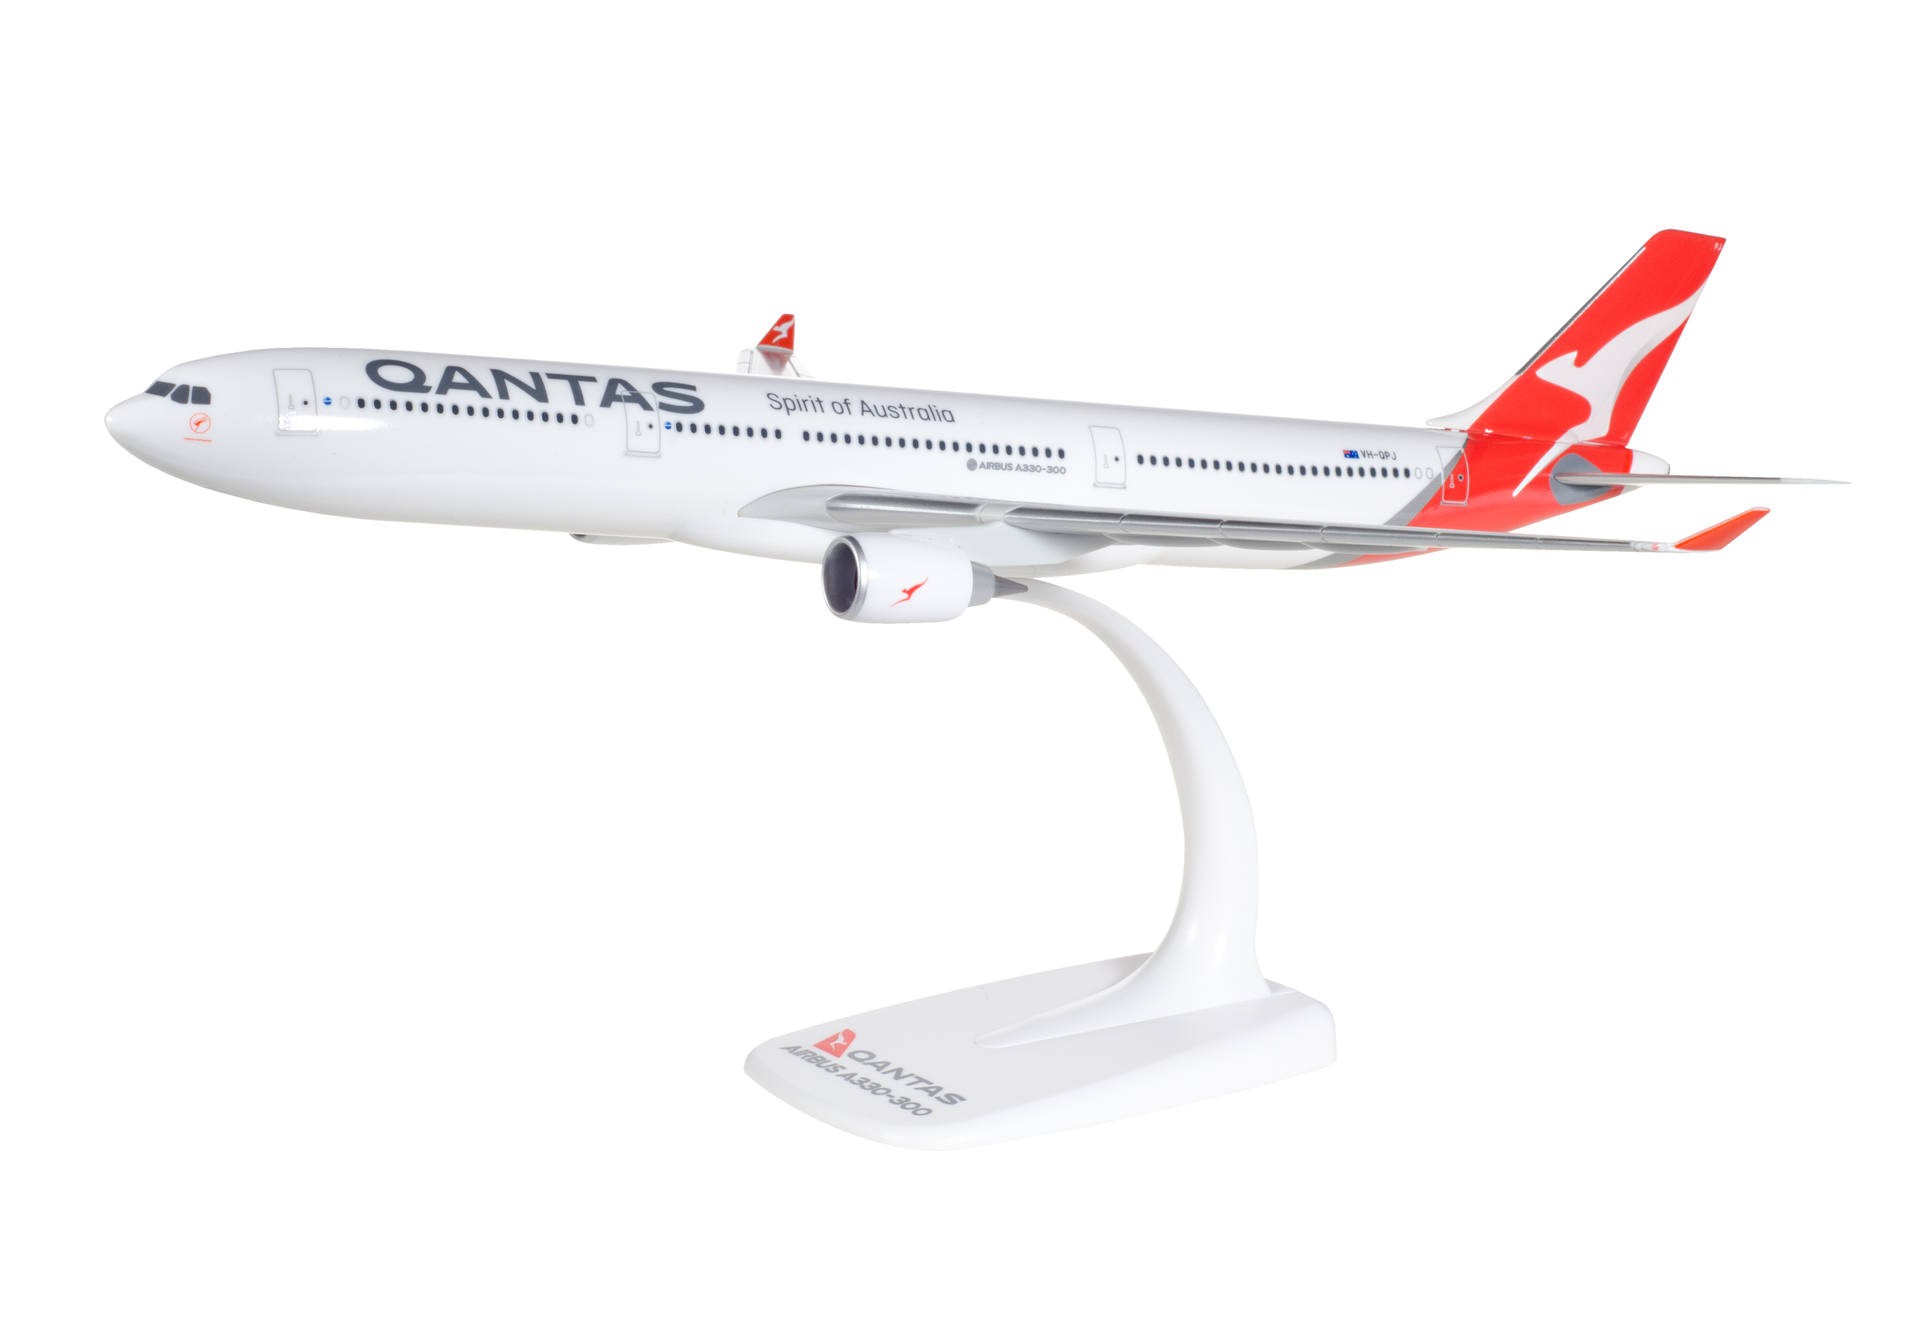 Herpa 611510 Wings Airbus A330-300 Qantas -2016 Snap-Fit Modellflugzeug 1:200